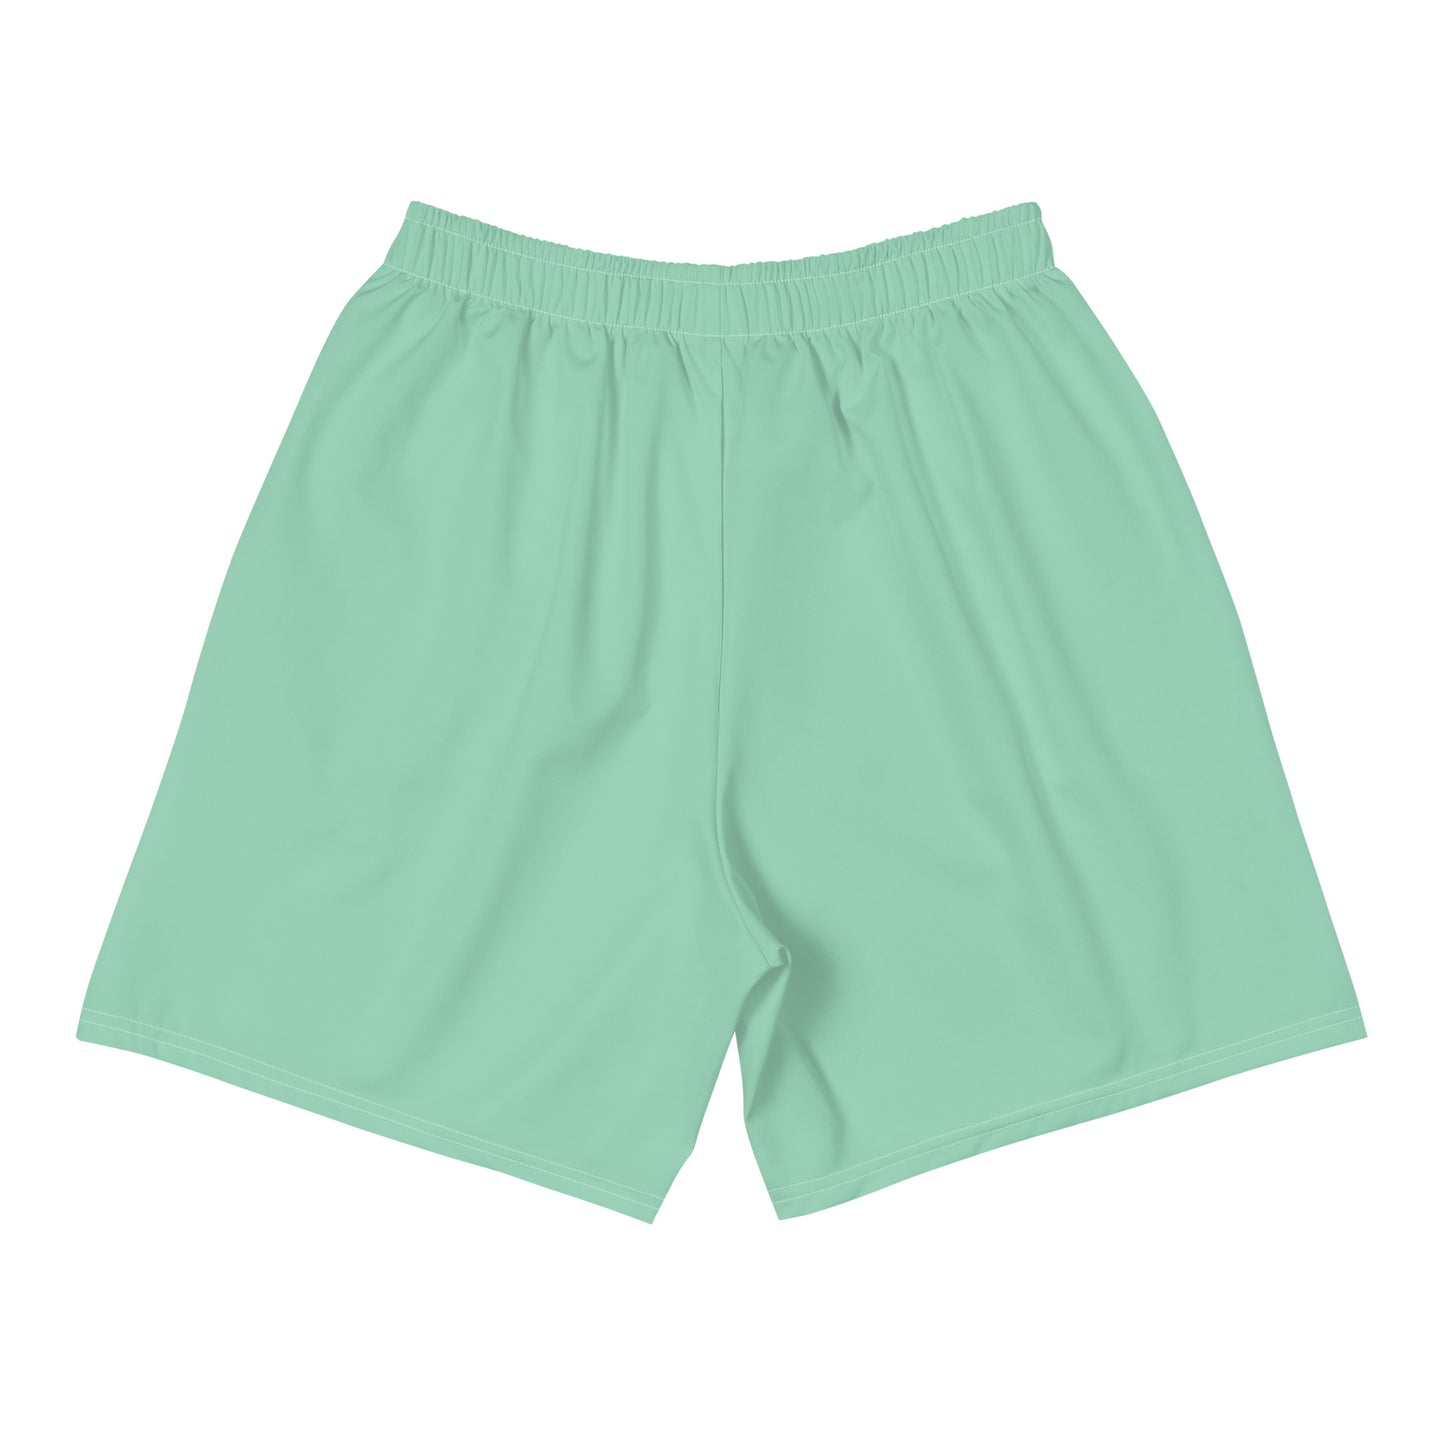 Sea Green - Sustainably Made Men's Short